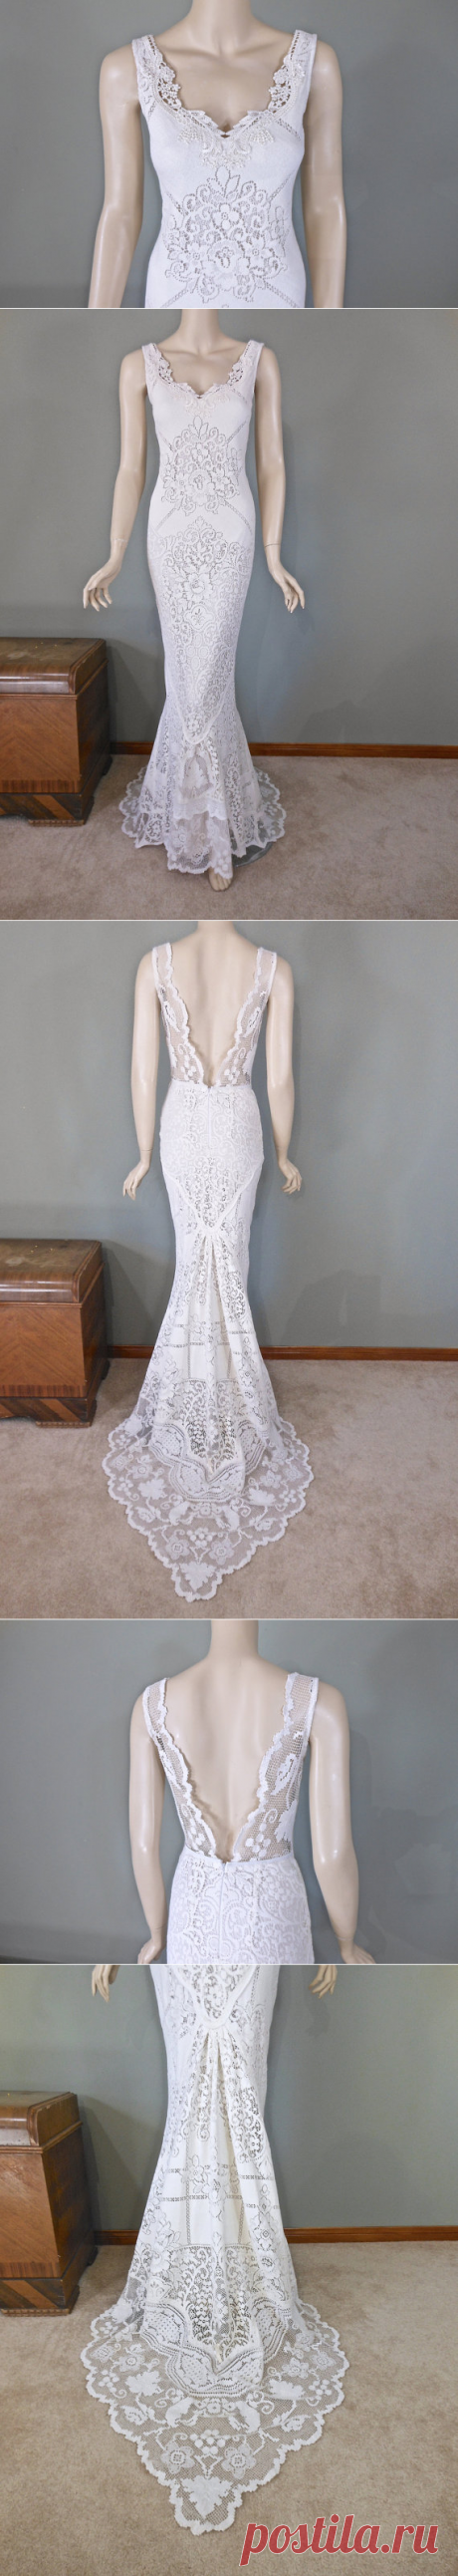 Bohemian Wedding Dress IVORY Lace Wedding Dress от MuseyClothing